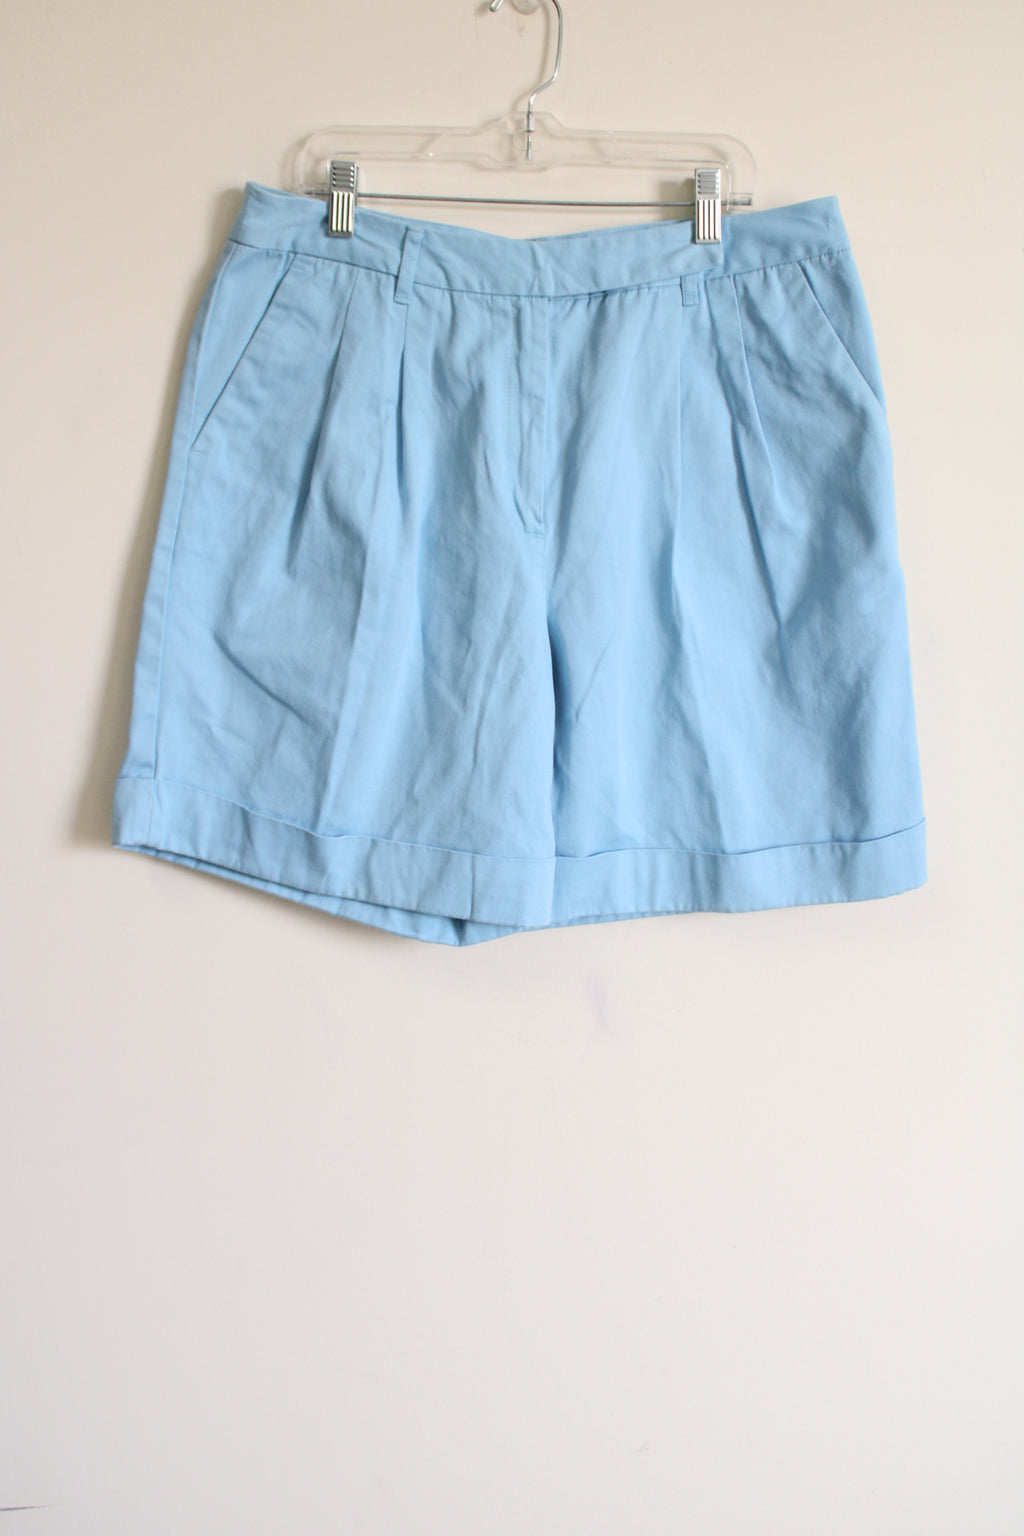 Van Heusen Blue Cotton Shorts | 12